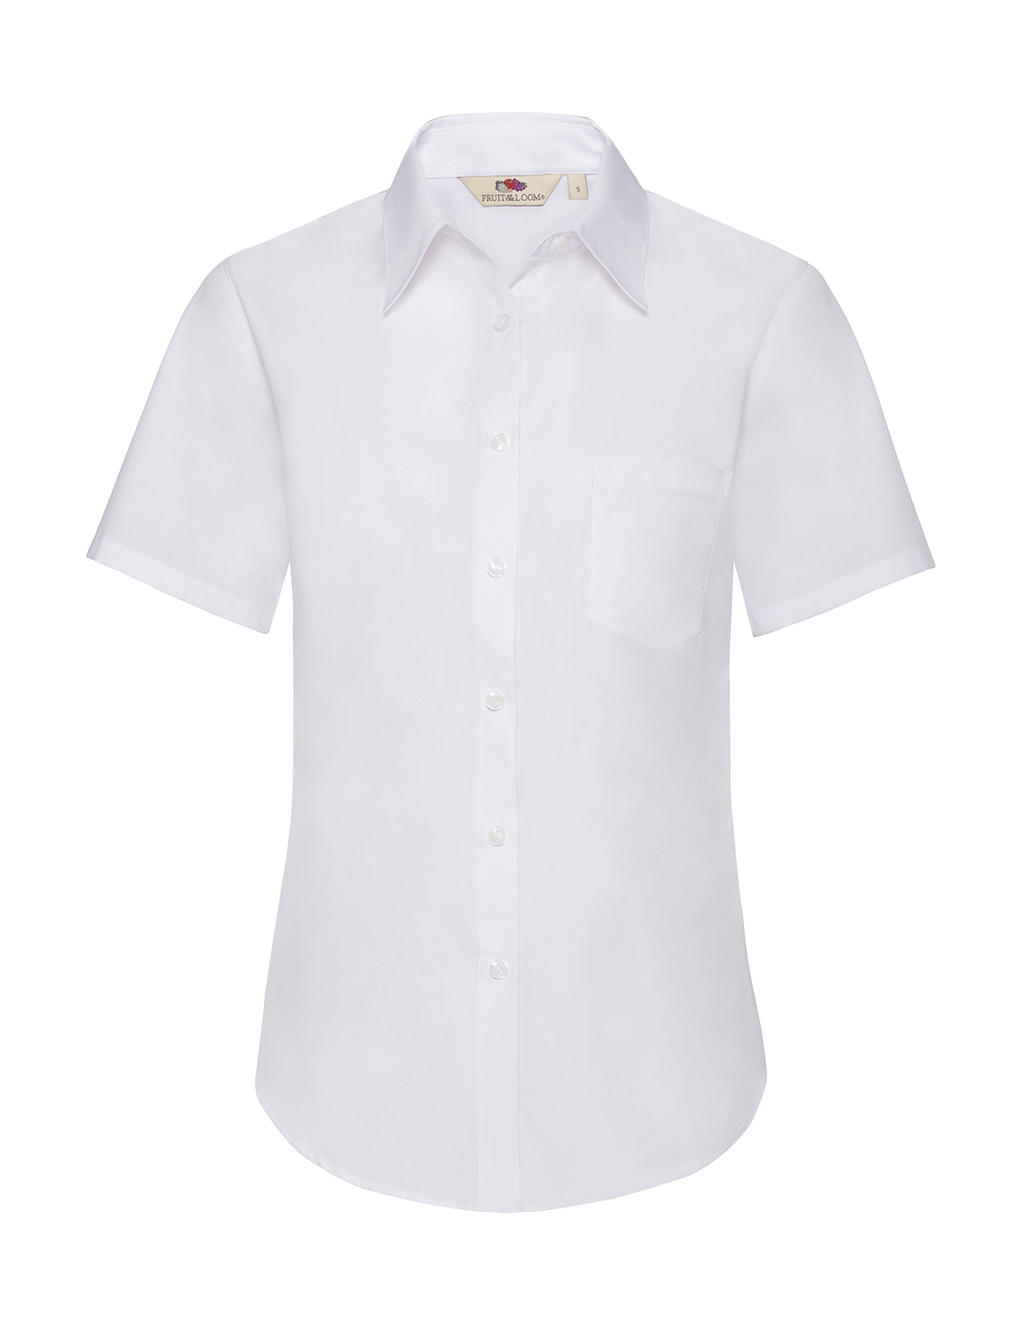  Ladies Poplin Shirt in Farbe White